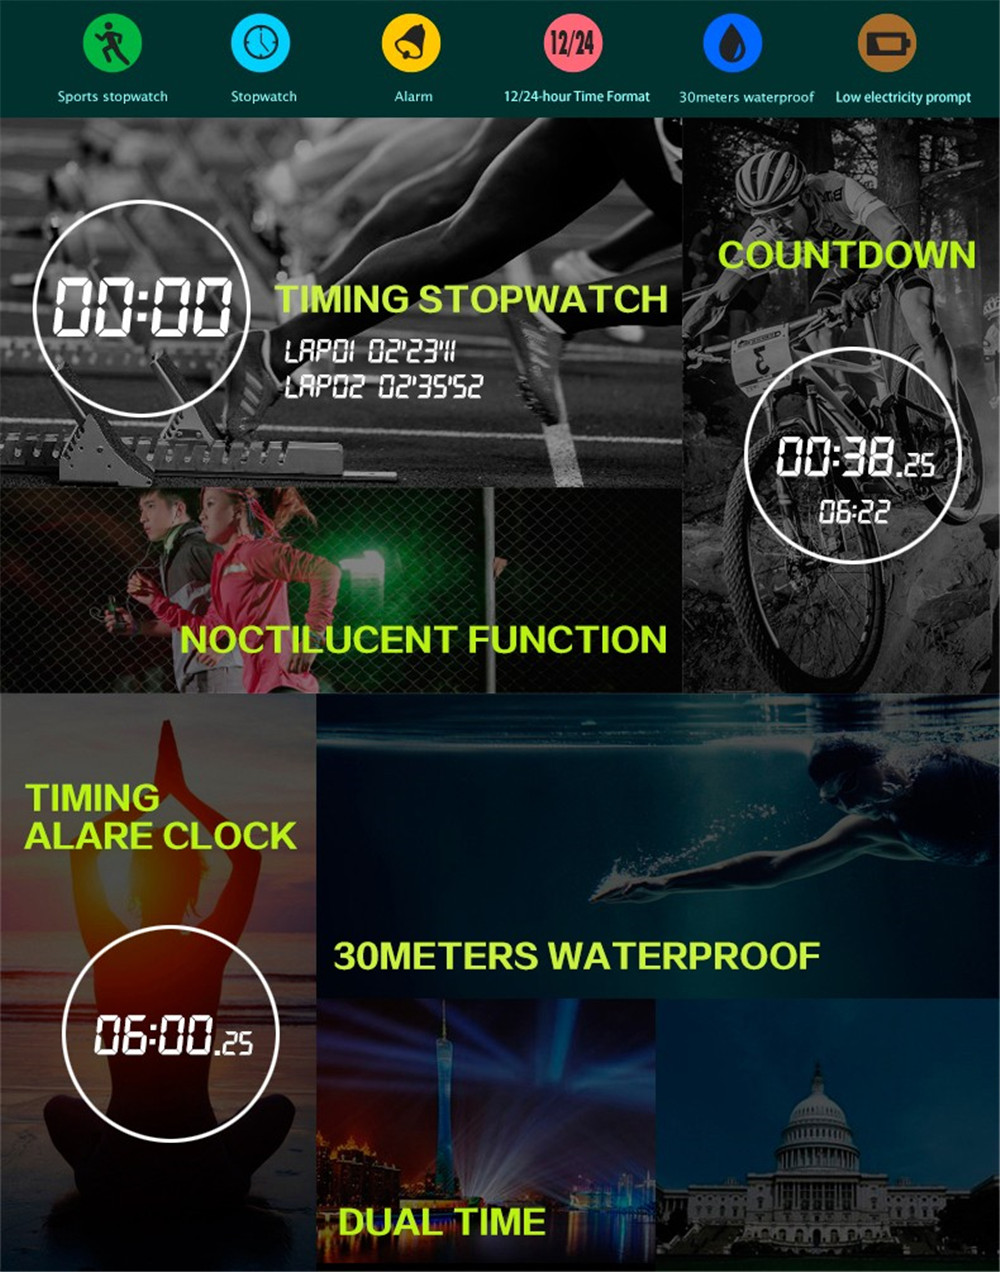 Sanda Men Military Sports Fashion Waterproof Big Dial LED Watch